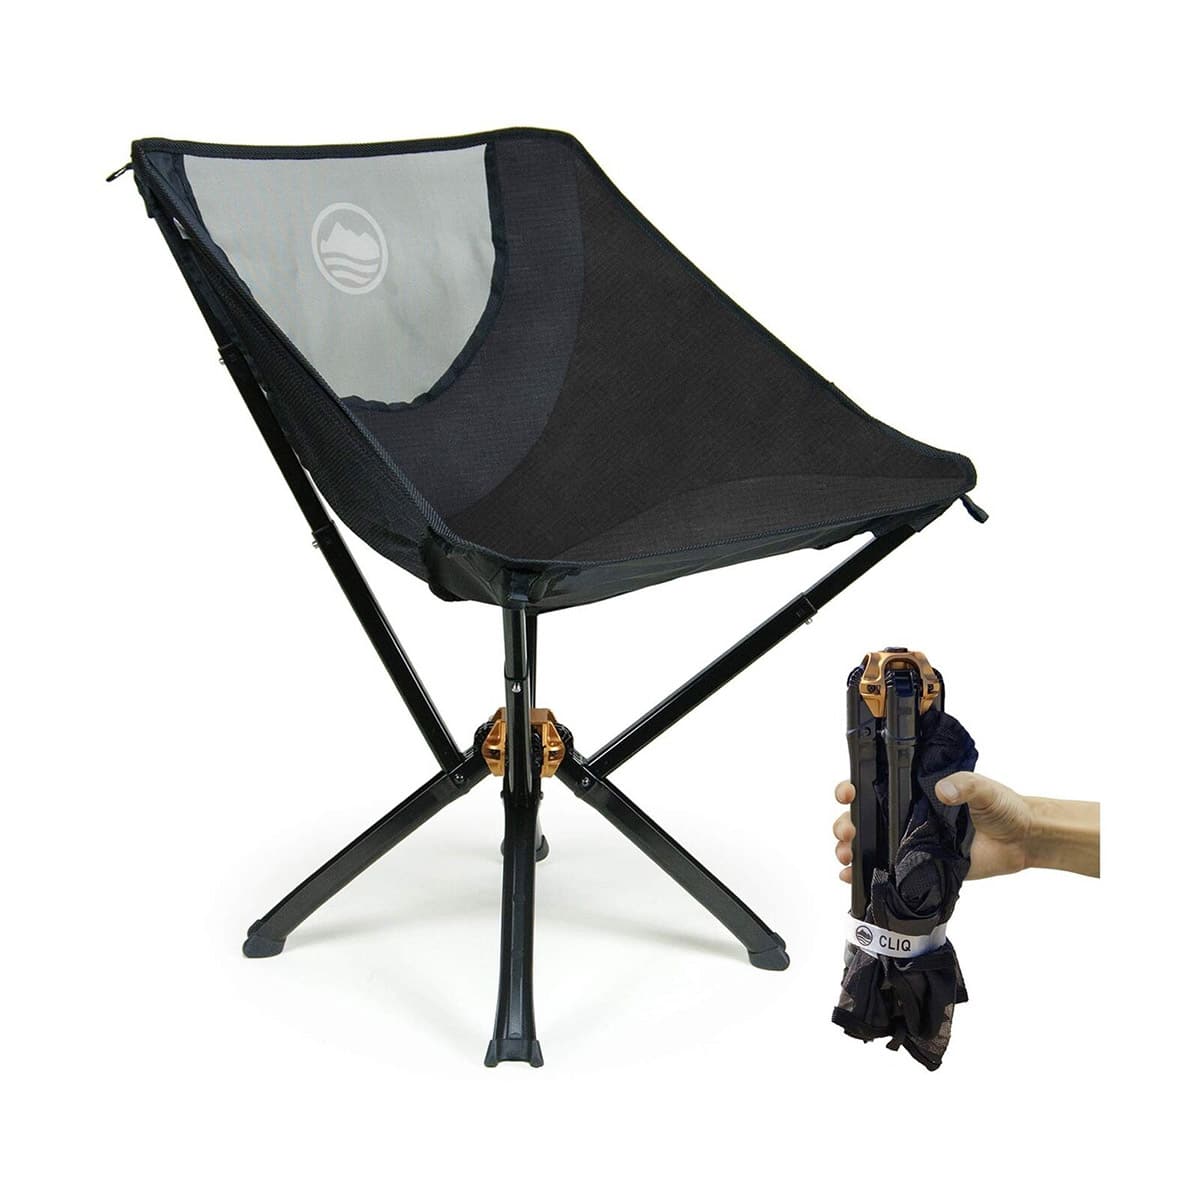 CLIQ Portable Lightweight Folding Chair